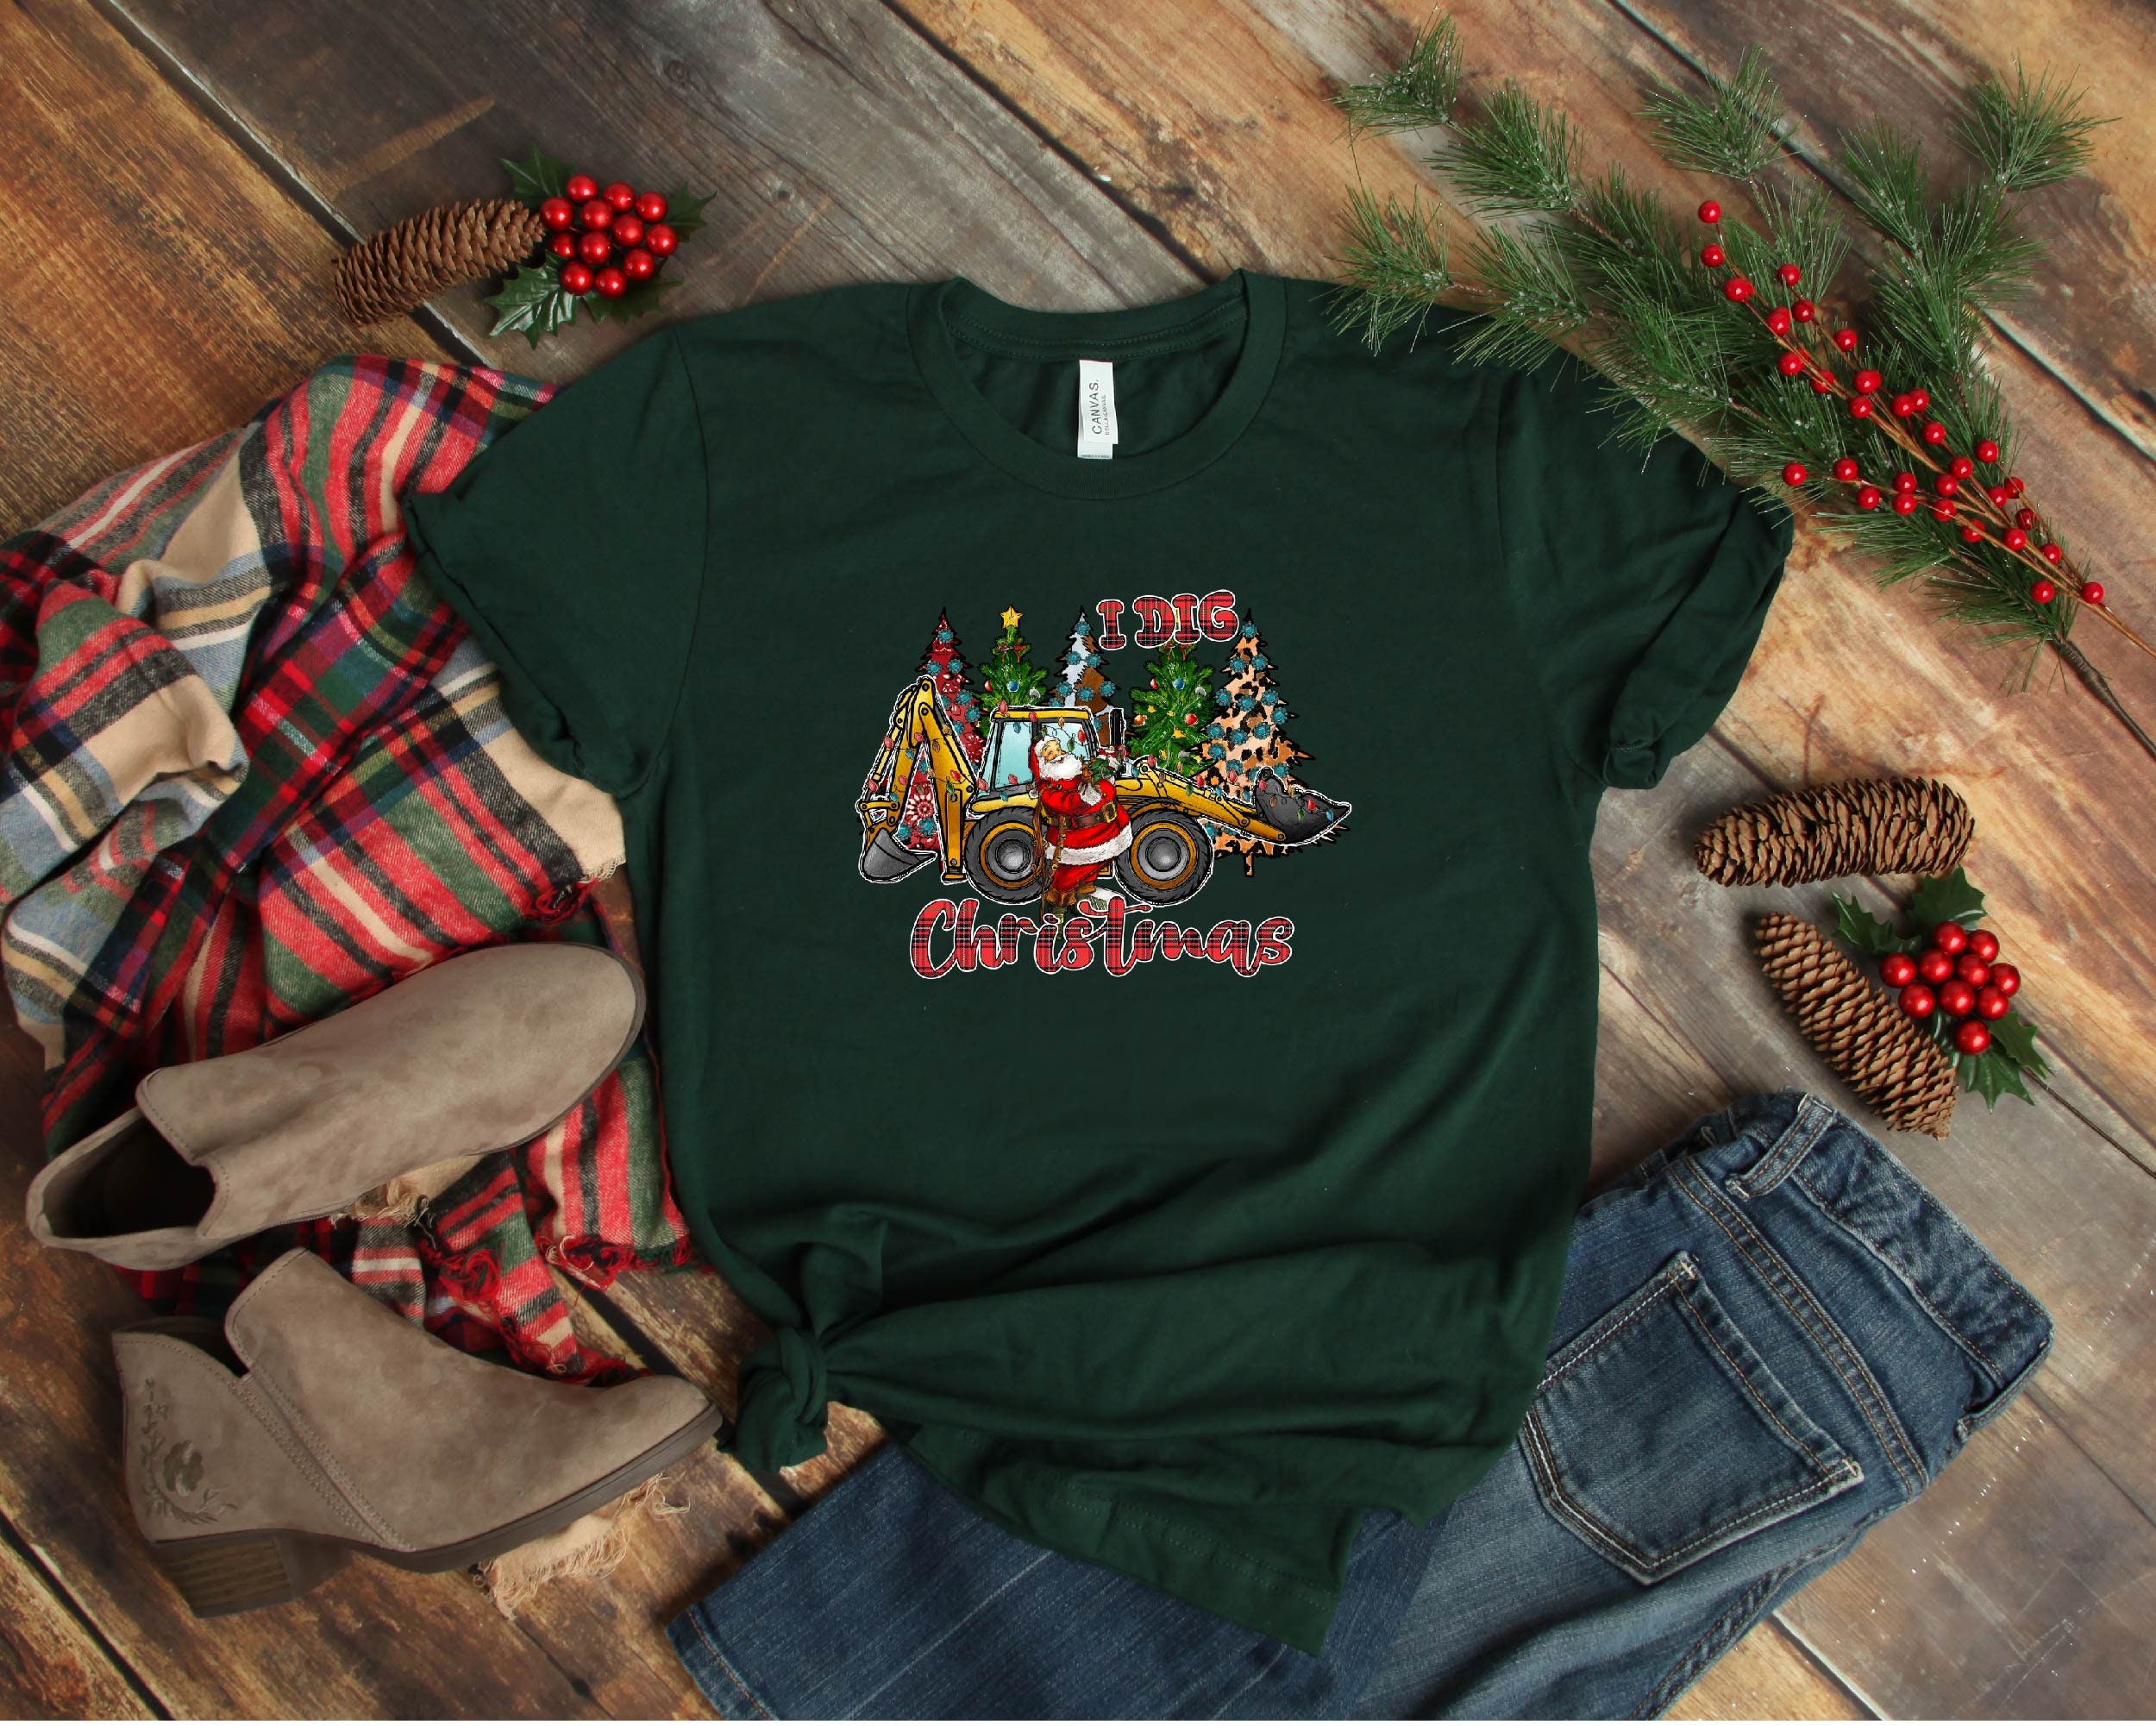 Discover I Dig Christmas Shirt, Merry Christmas Shirt, Backhoe Loader Shirt